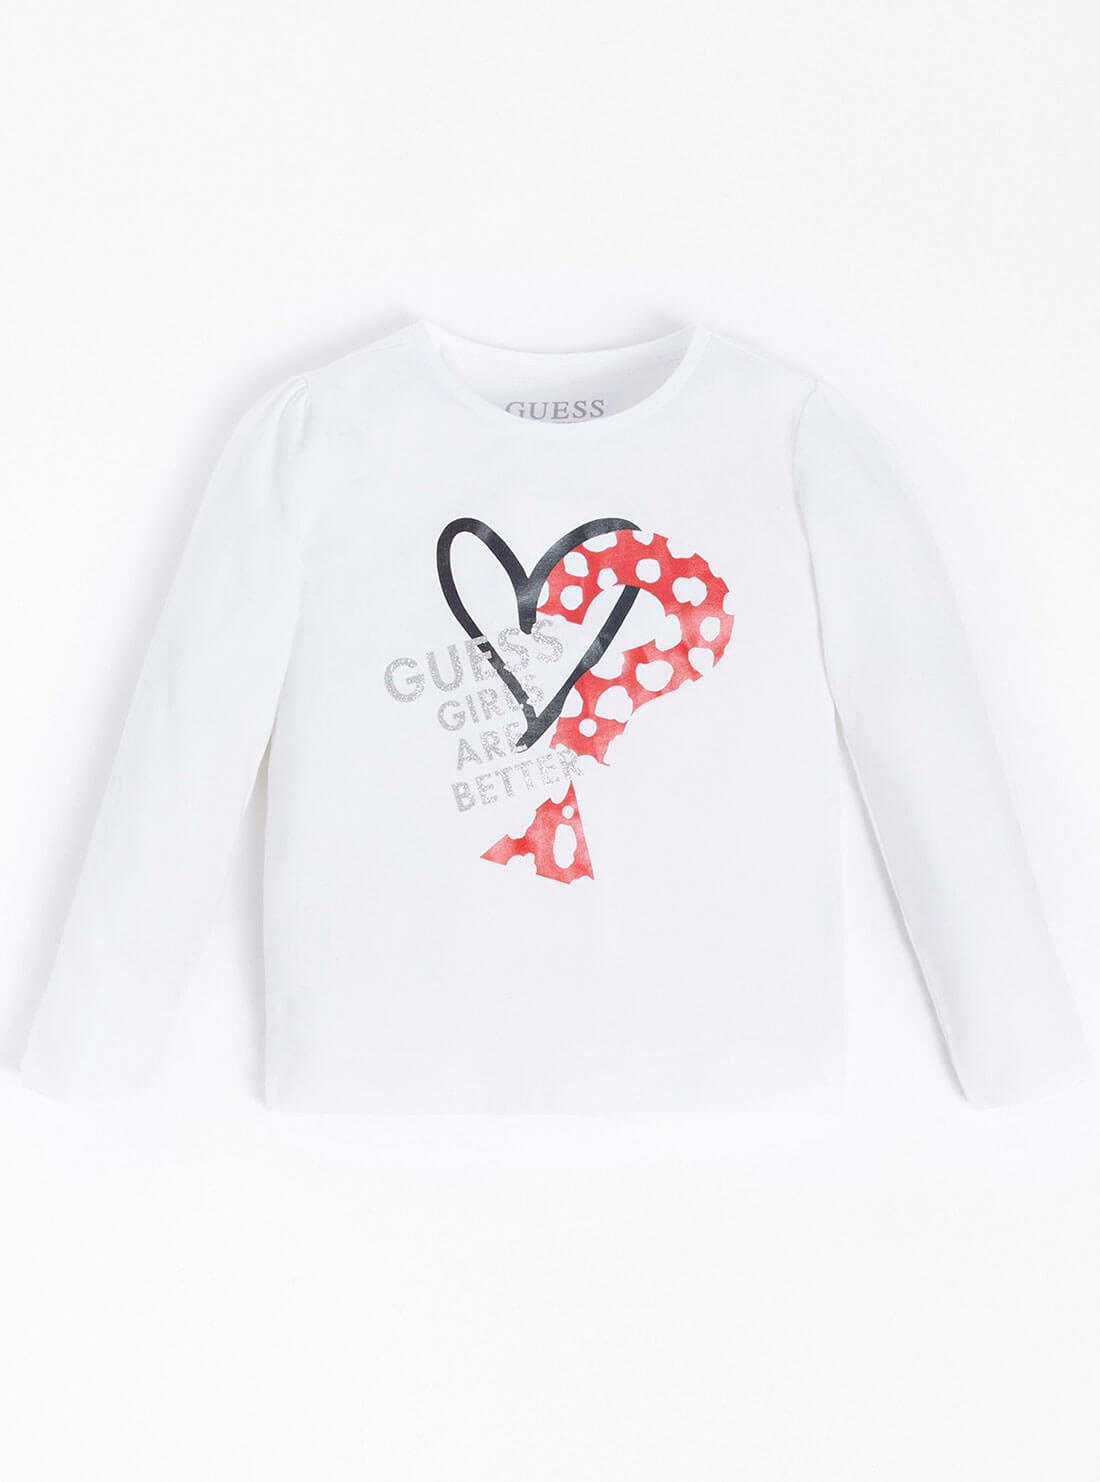 GUESS Little Girls White Girls Are Better Logo T-Shirt (2-7) K2RI12K6YW1  Front View